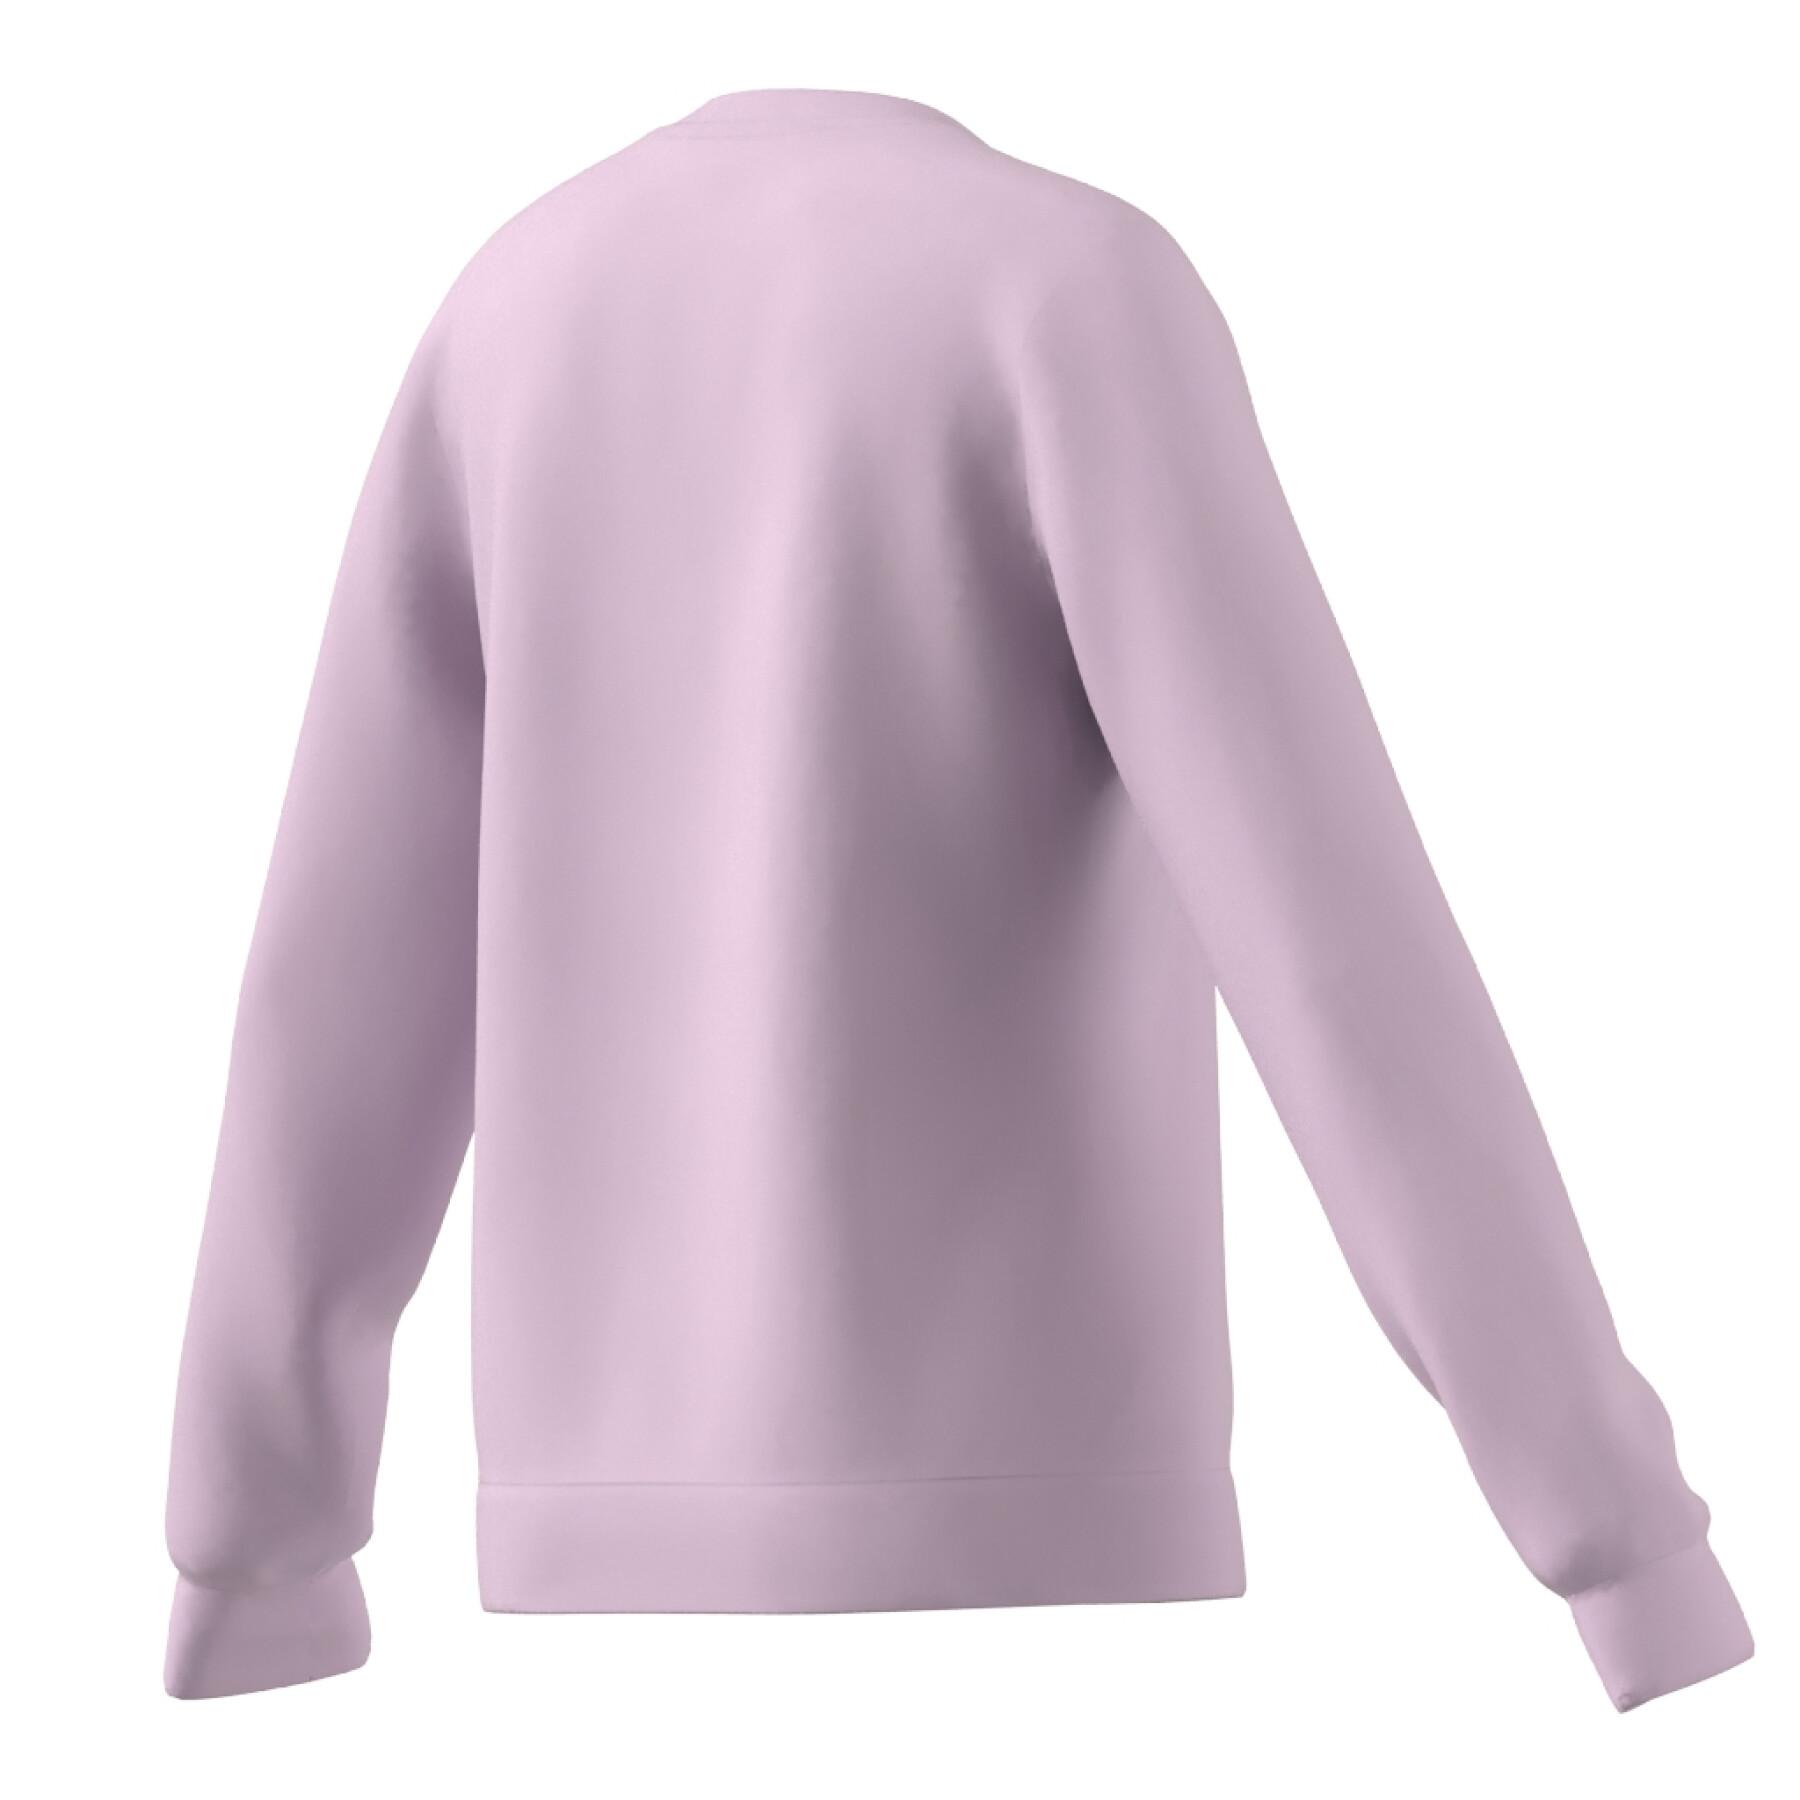 Sweatshirt grand logo coton fille adidas Essentials